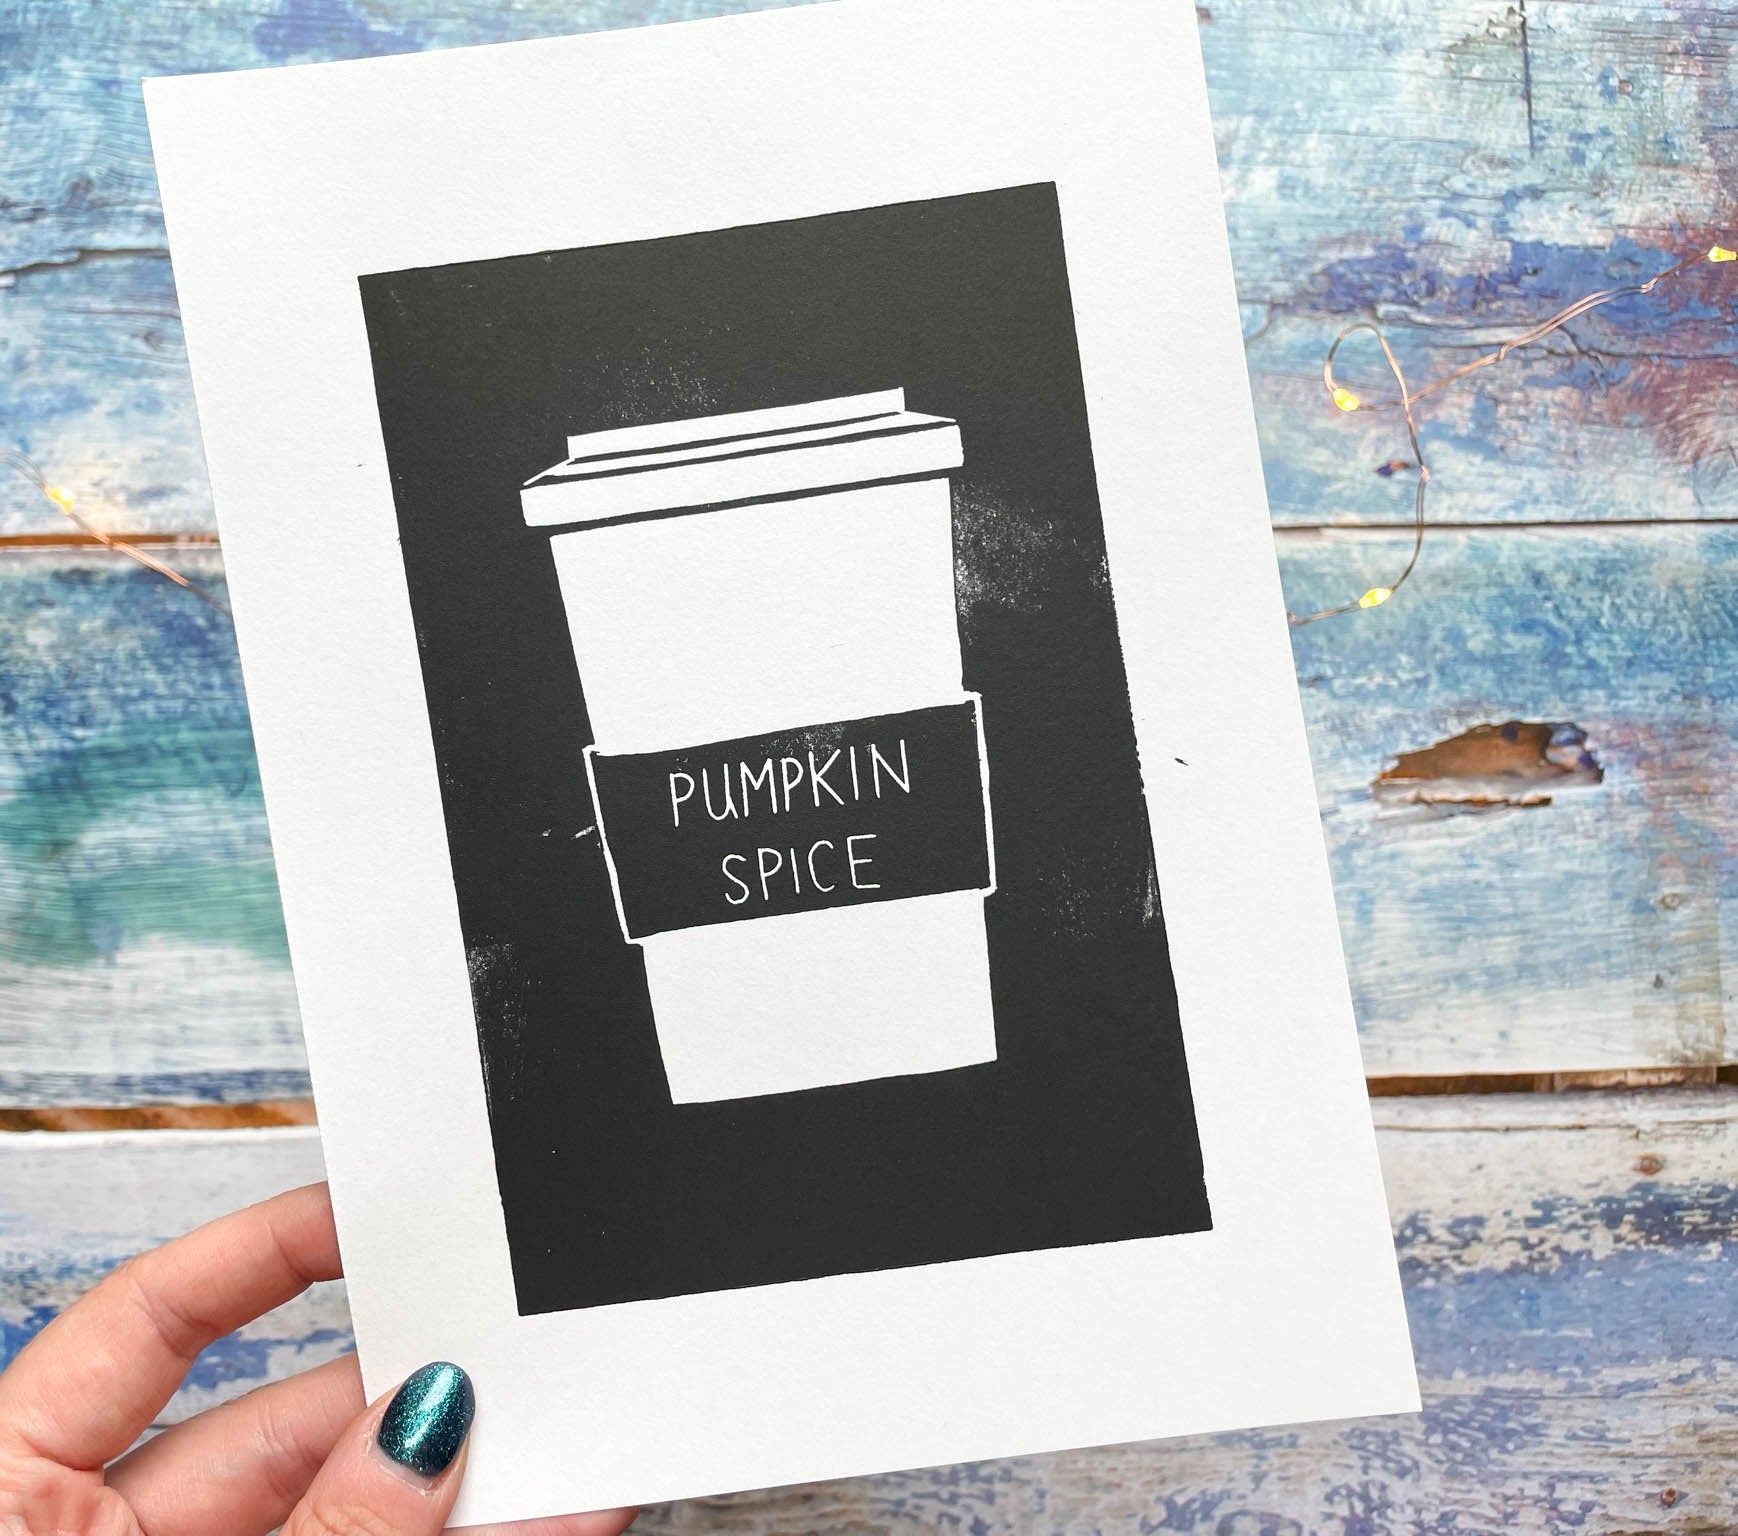 A simplistic lino print of a pumpkin spice latte in a takeout cup in black